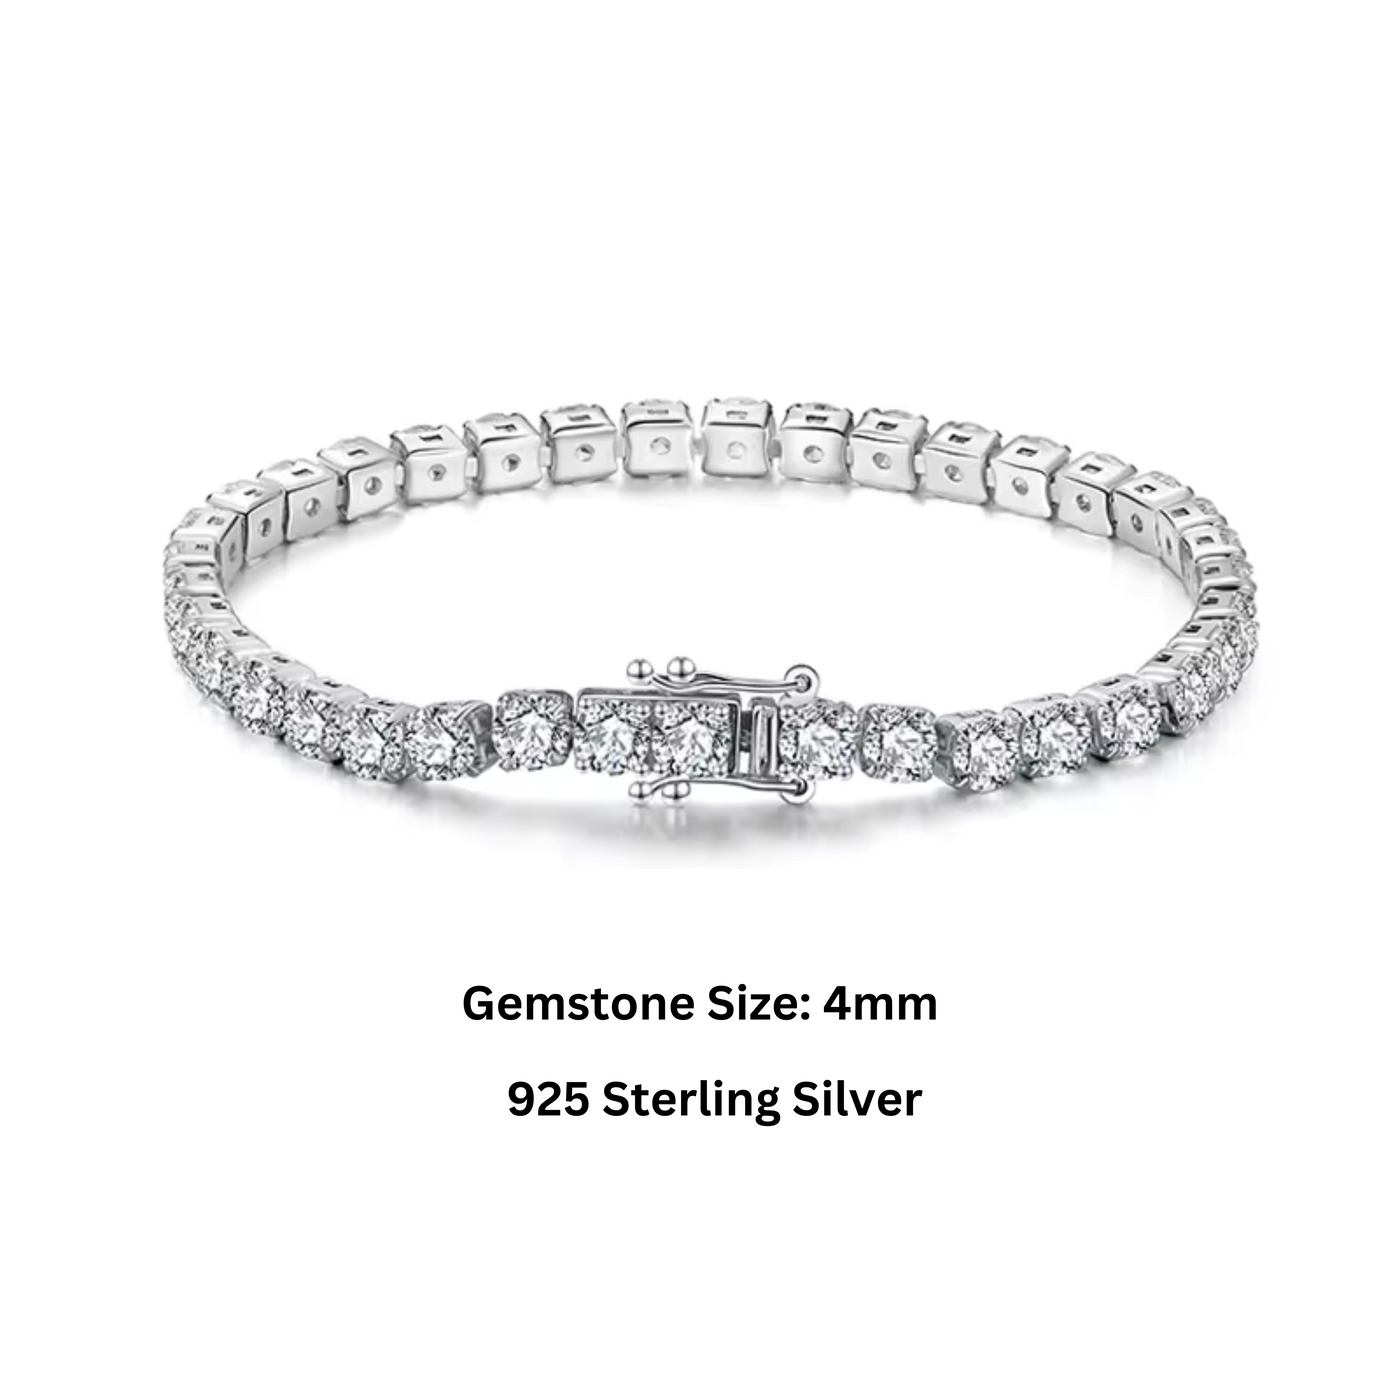 925 Sterling Silver Tennis Bracelet